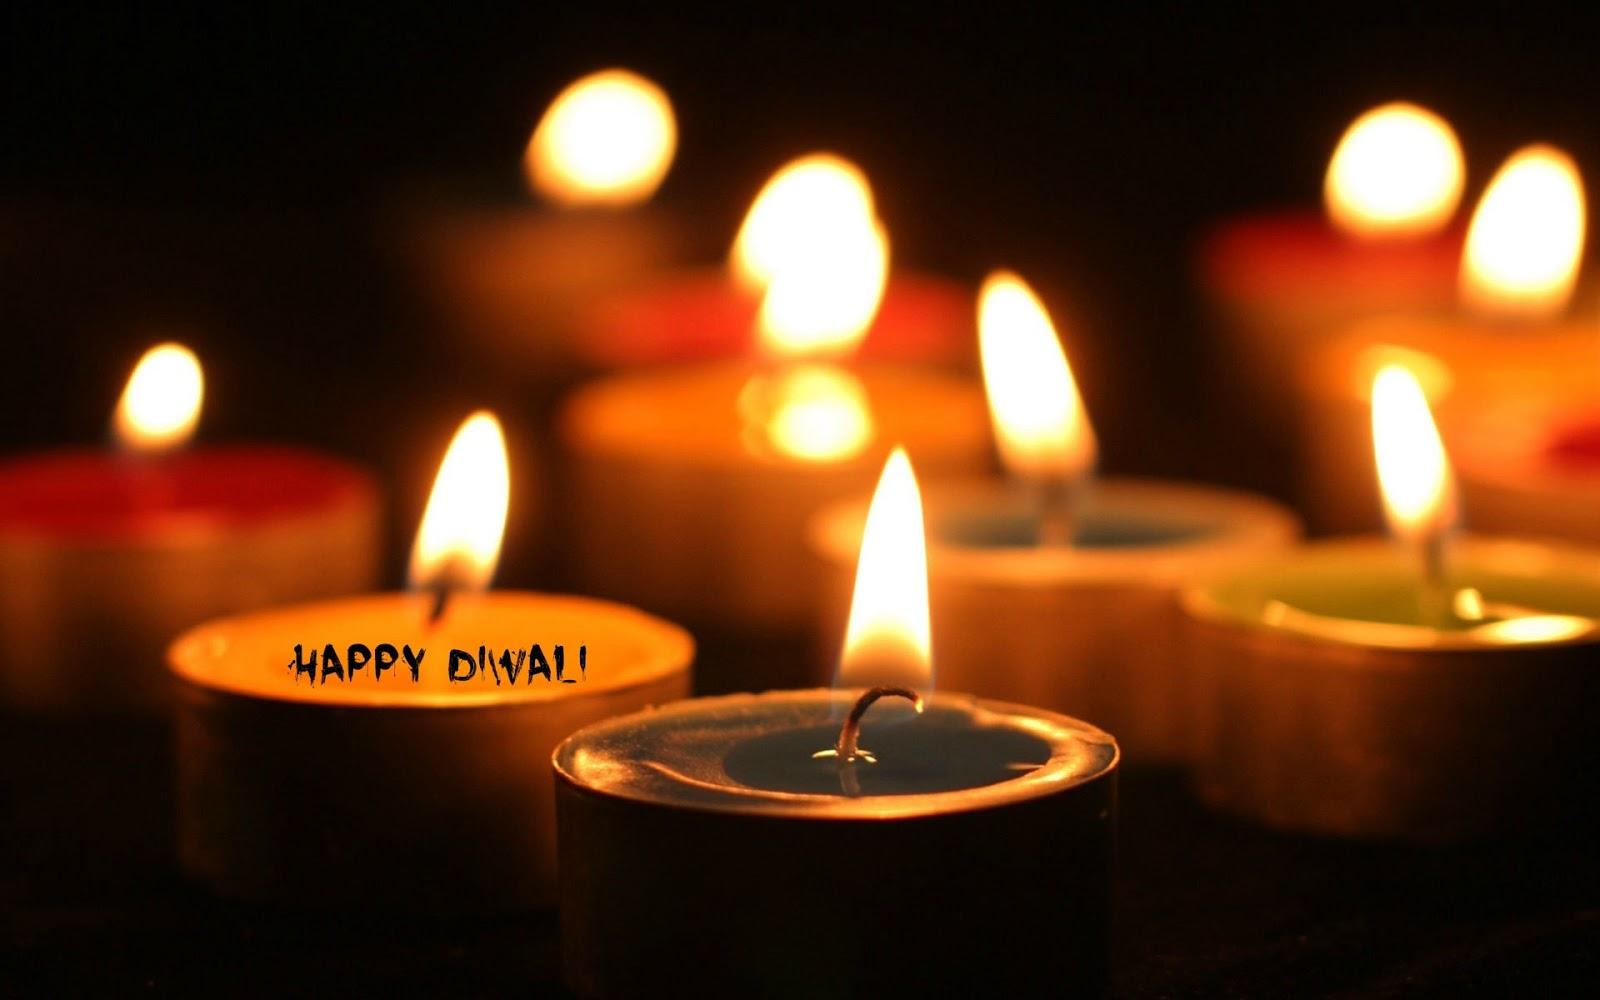 Happy Diwali 2016 Greeting Cards, Diwali Wishes, Quotes, Diwali